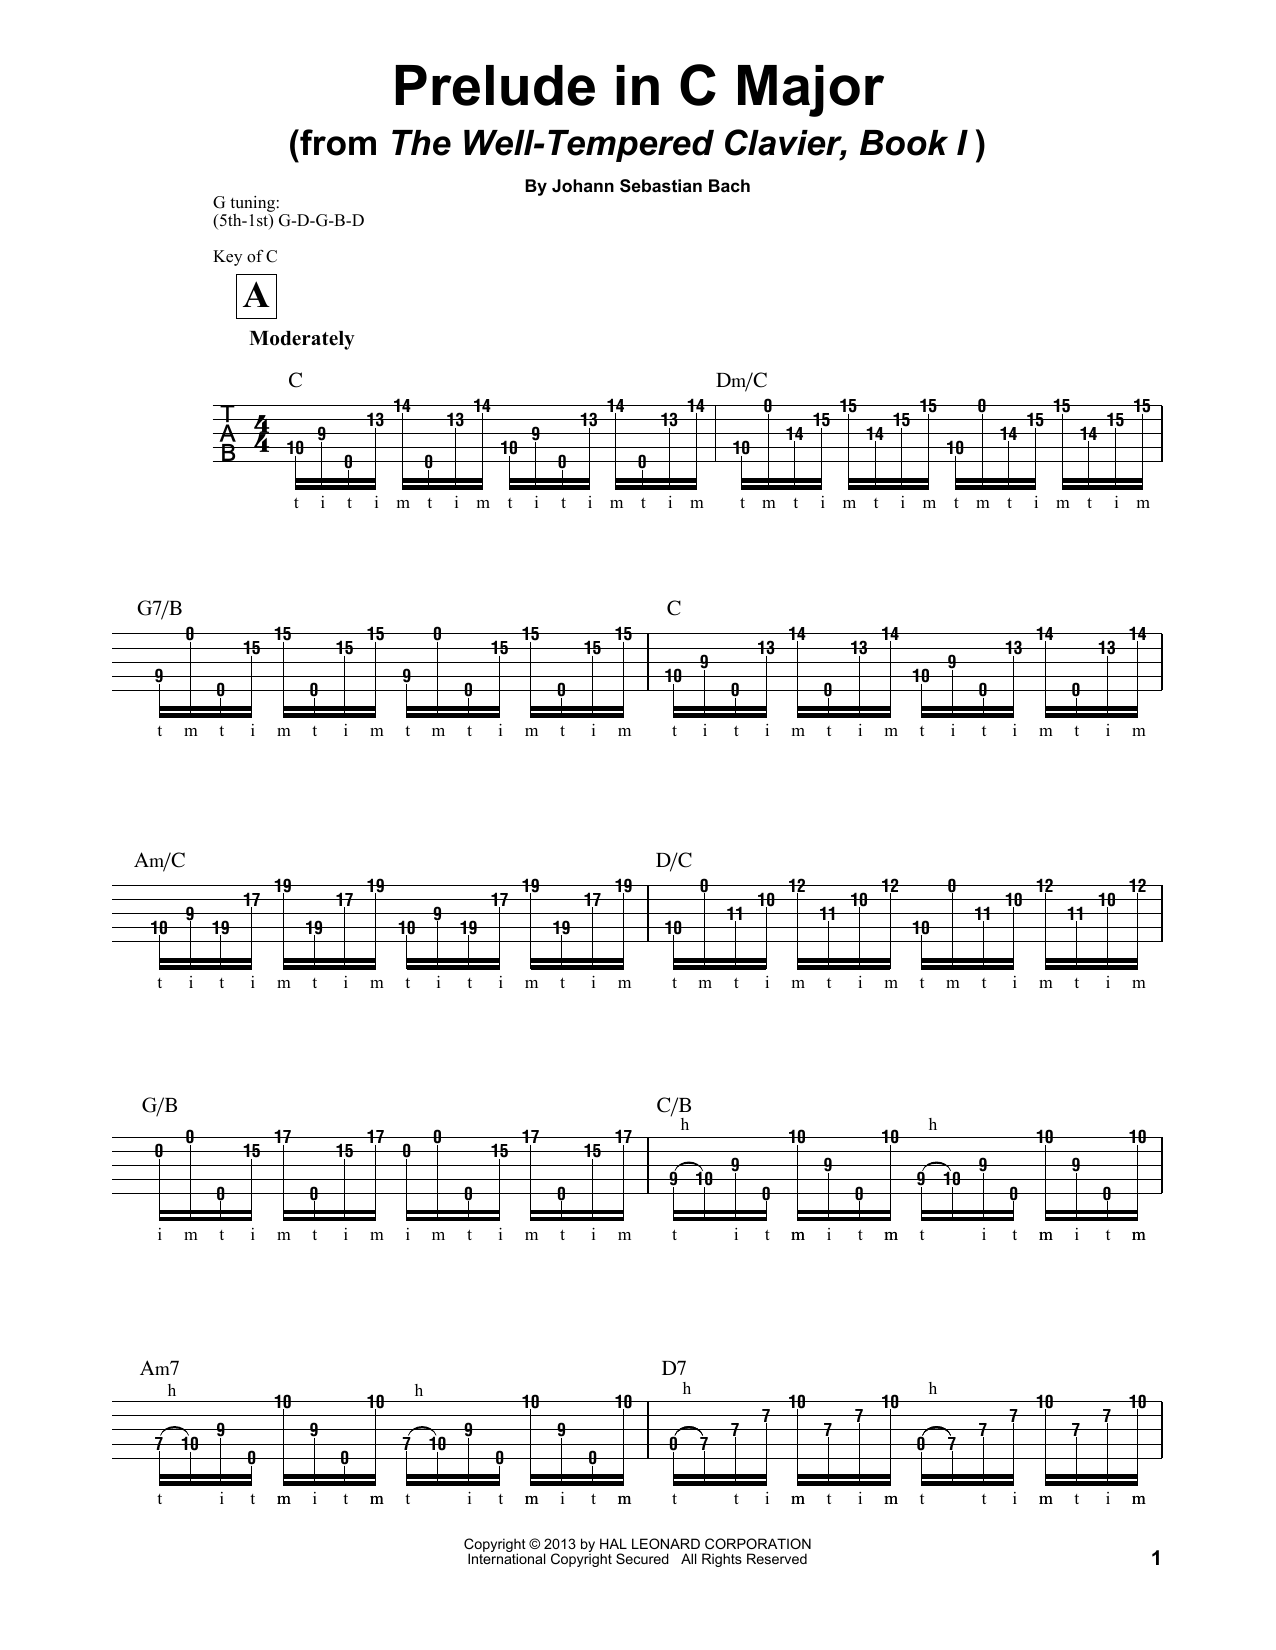 Mark Phillips Prelude in C Major Sheet Music Notes & Chords for Banjo - Download or Print PDF